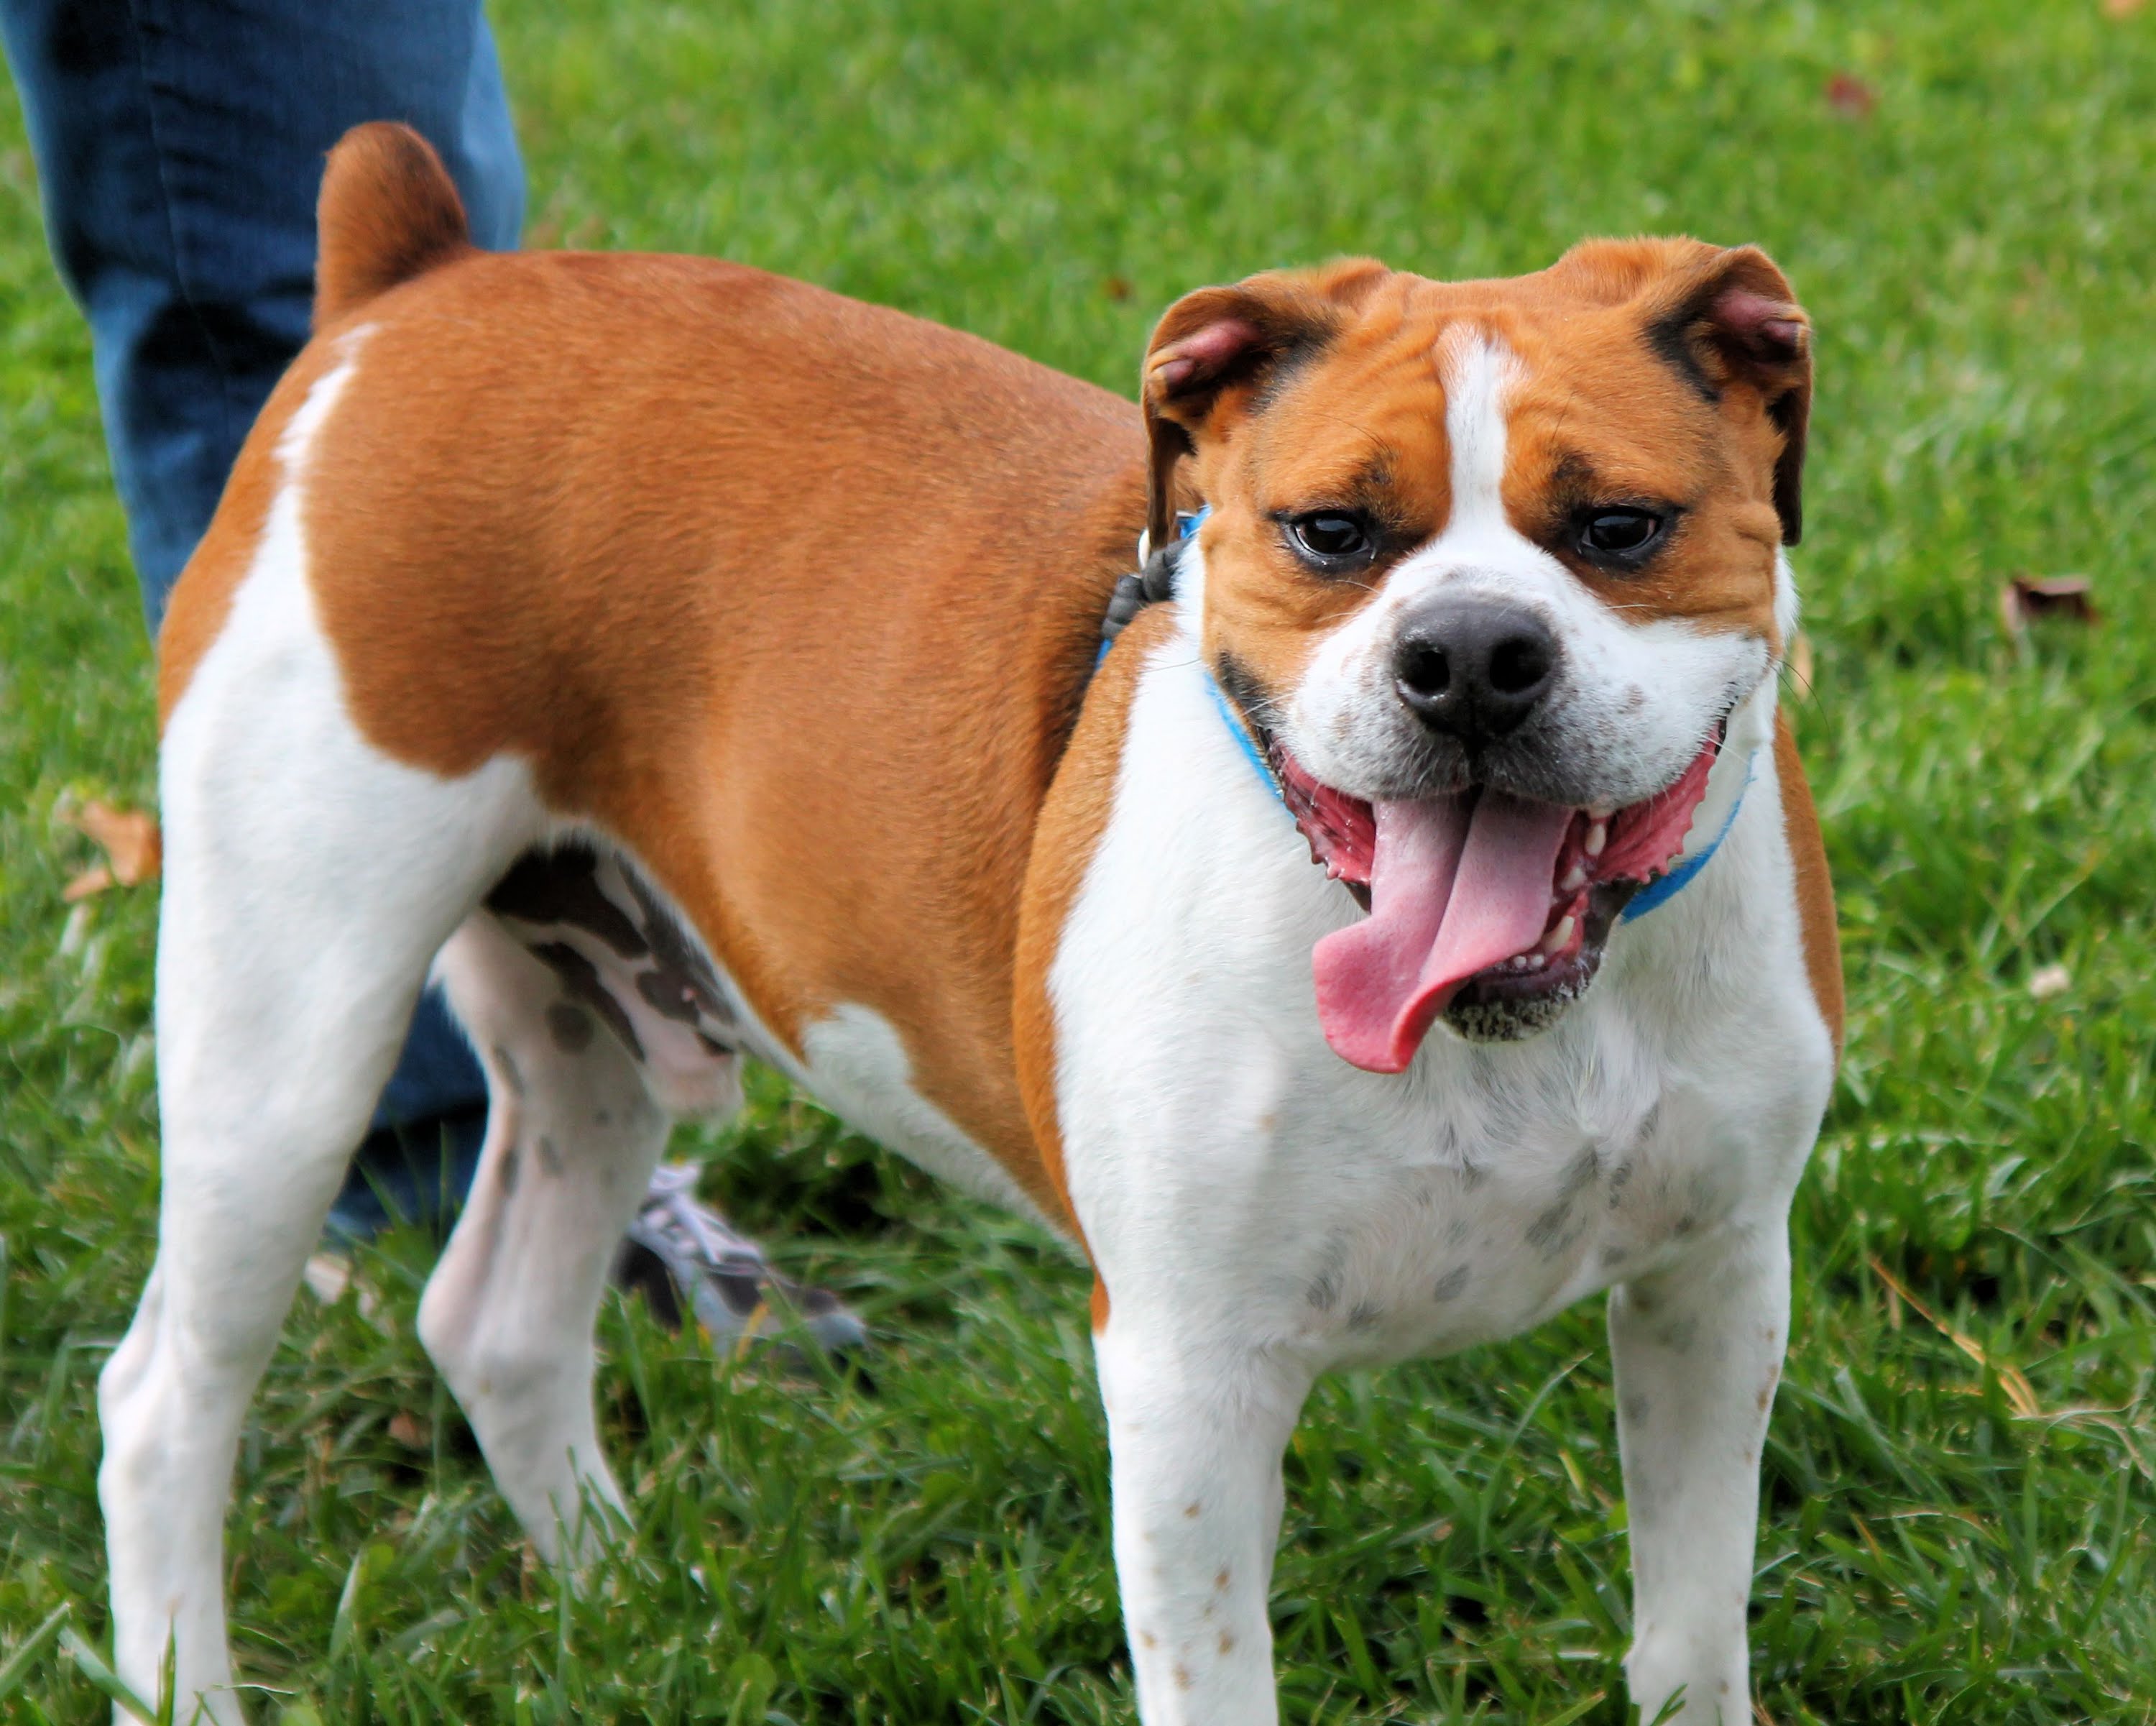 Boxer & Beagle Mix (A.K.A. boggle dog) breed info